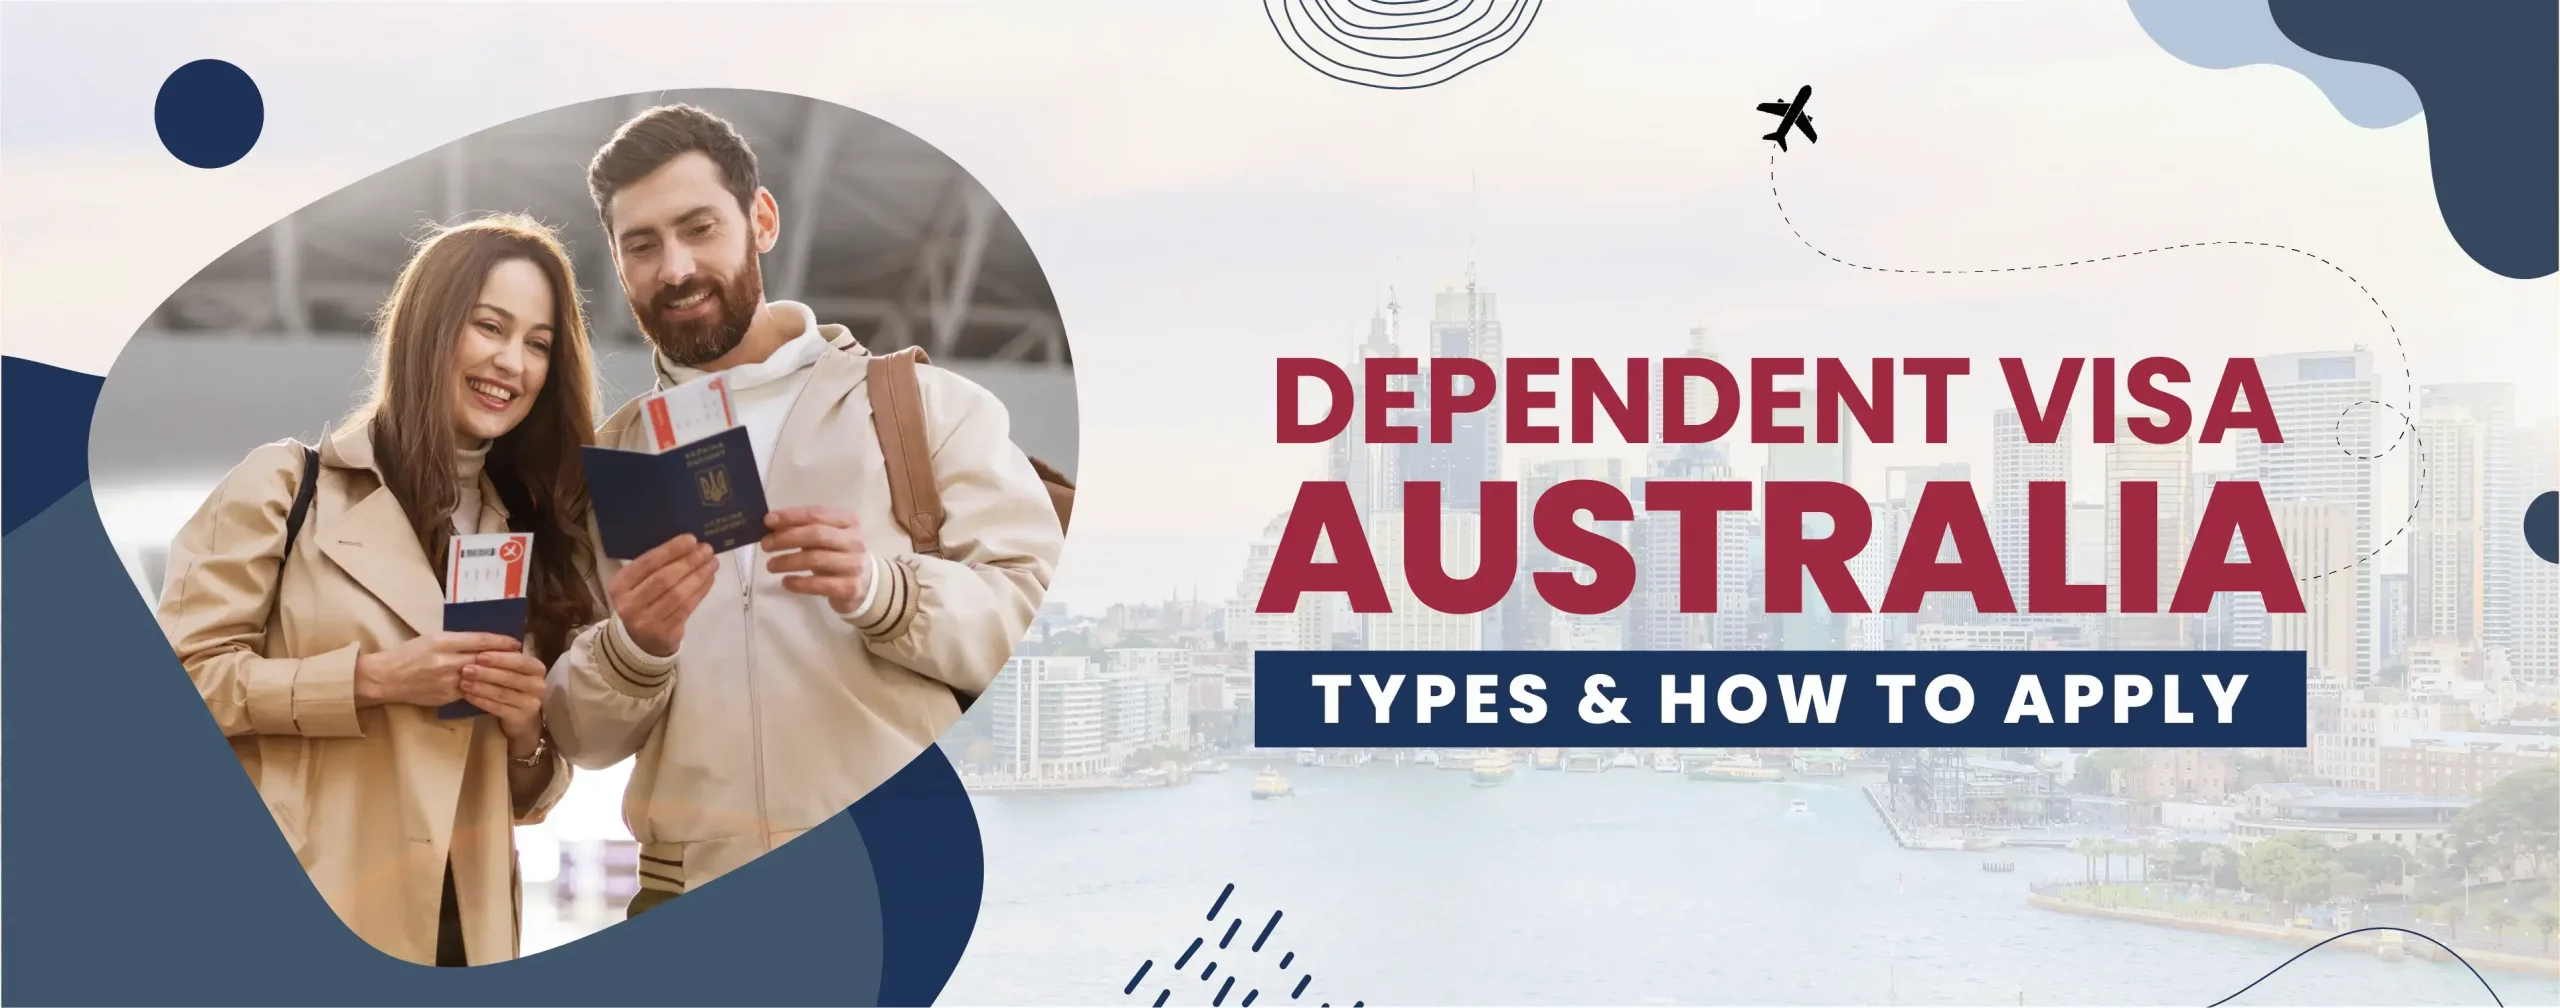 Dependent Visa Australia: Types & How to Apply